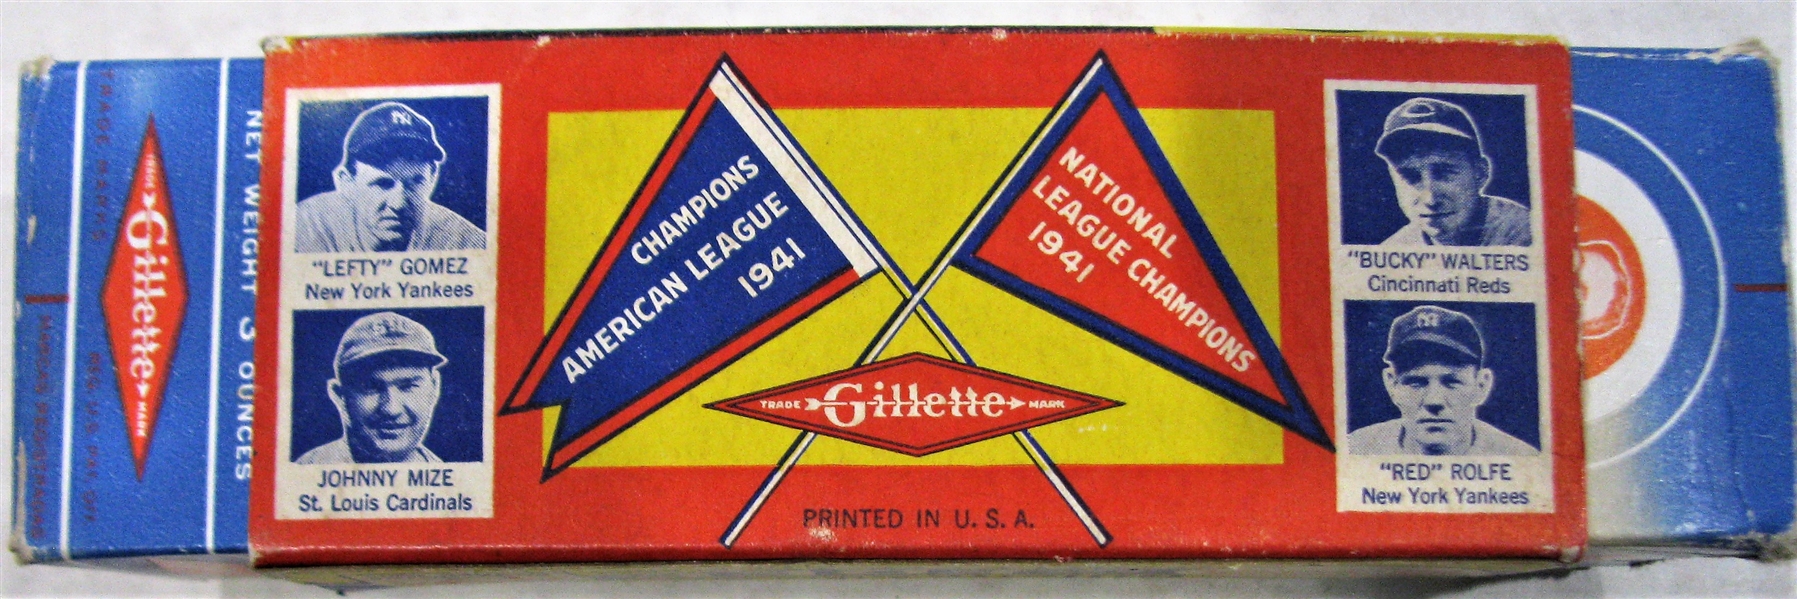 RSRE 1941 GILLETE WORLD SERIES SPECIAL w/ORIGINAL BOX- JOHNNY MIZE & LEFTY GOMEZ